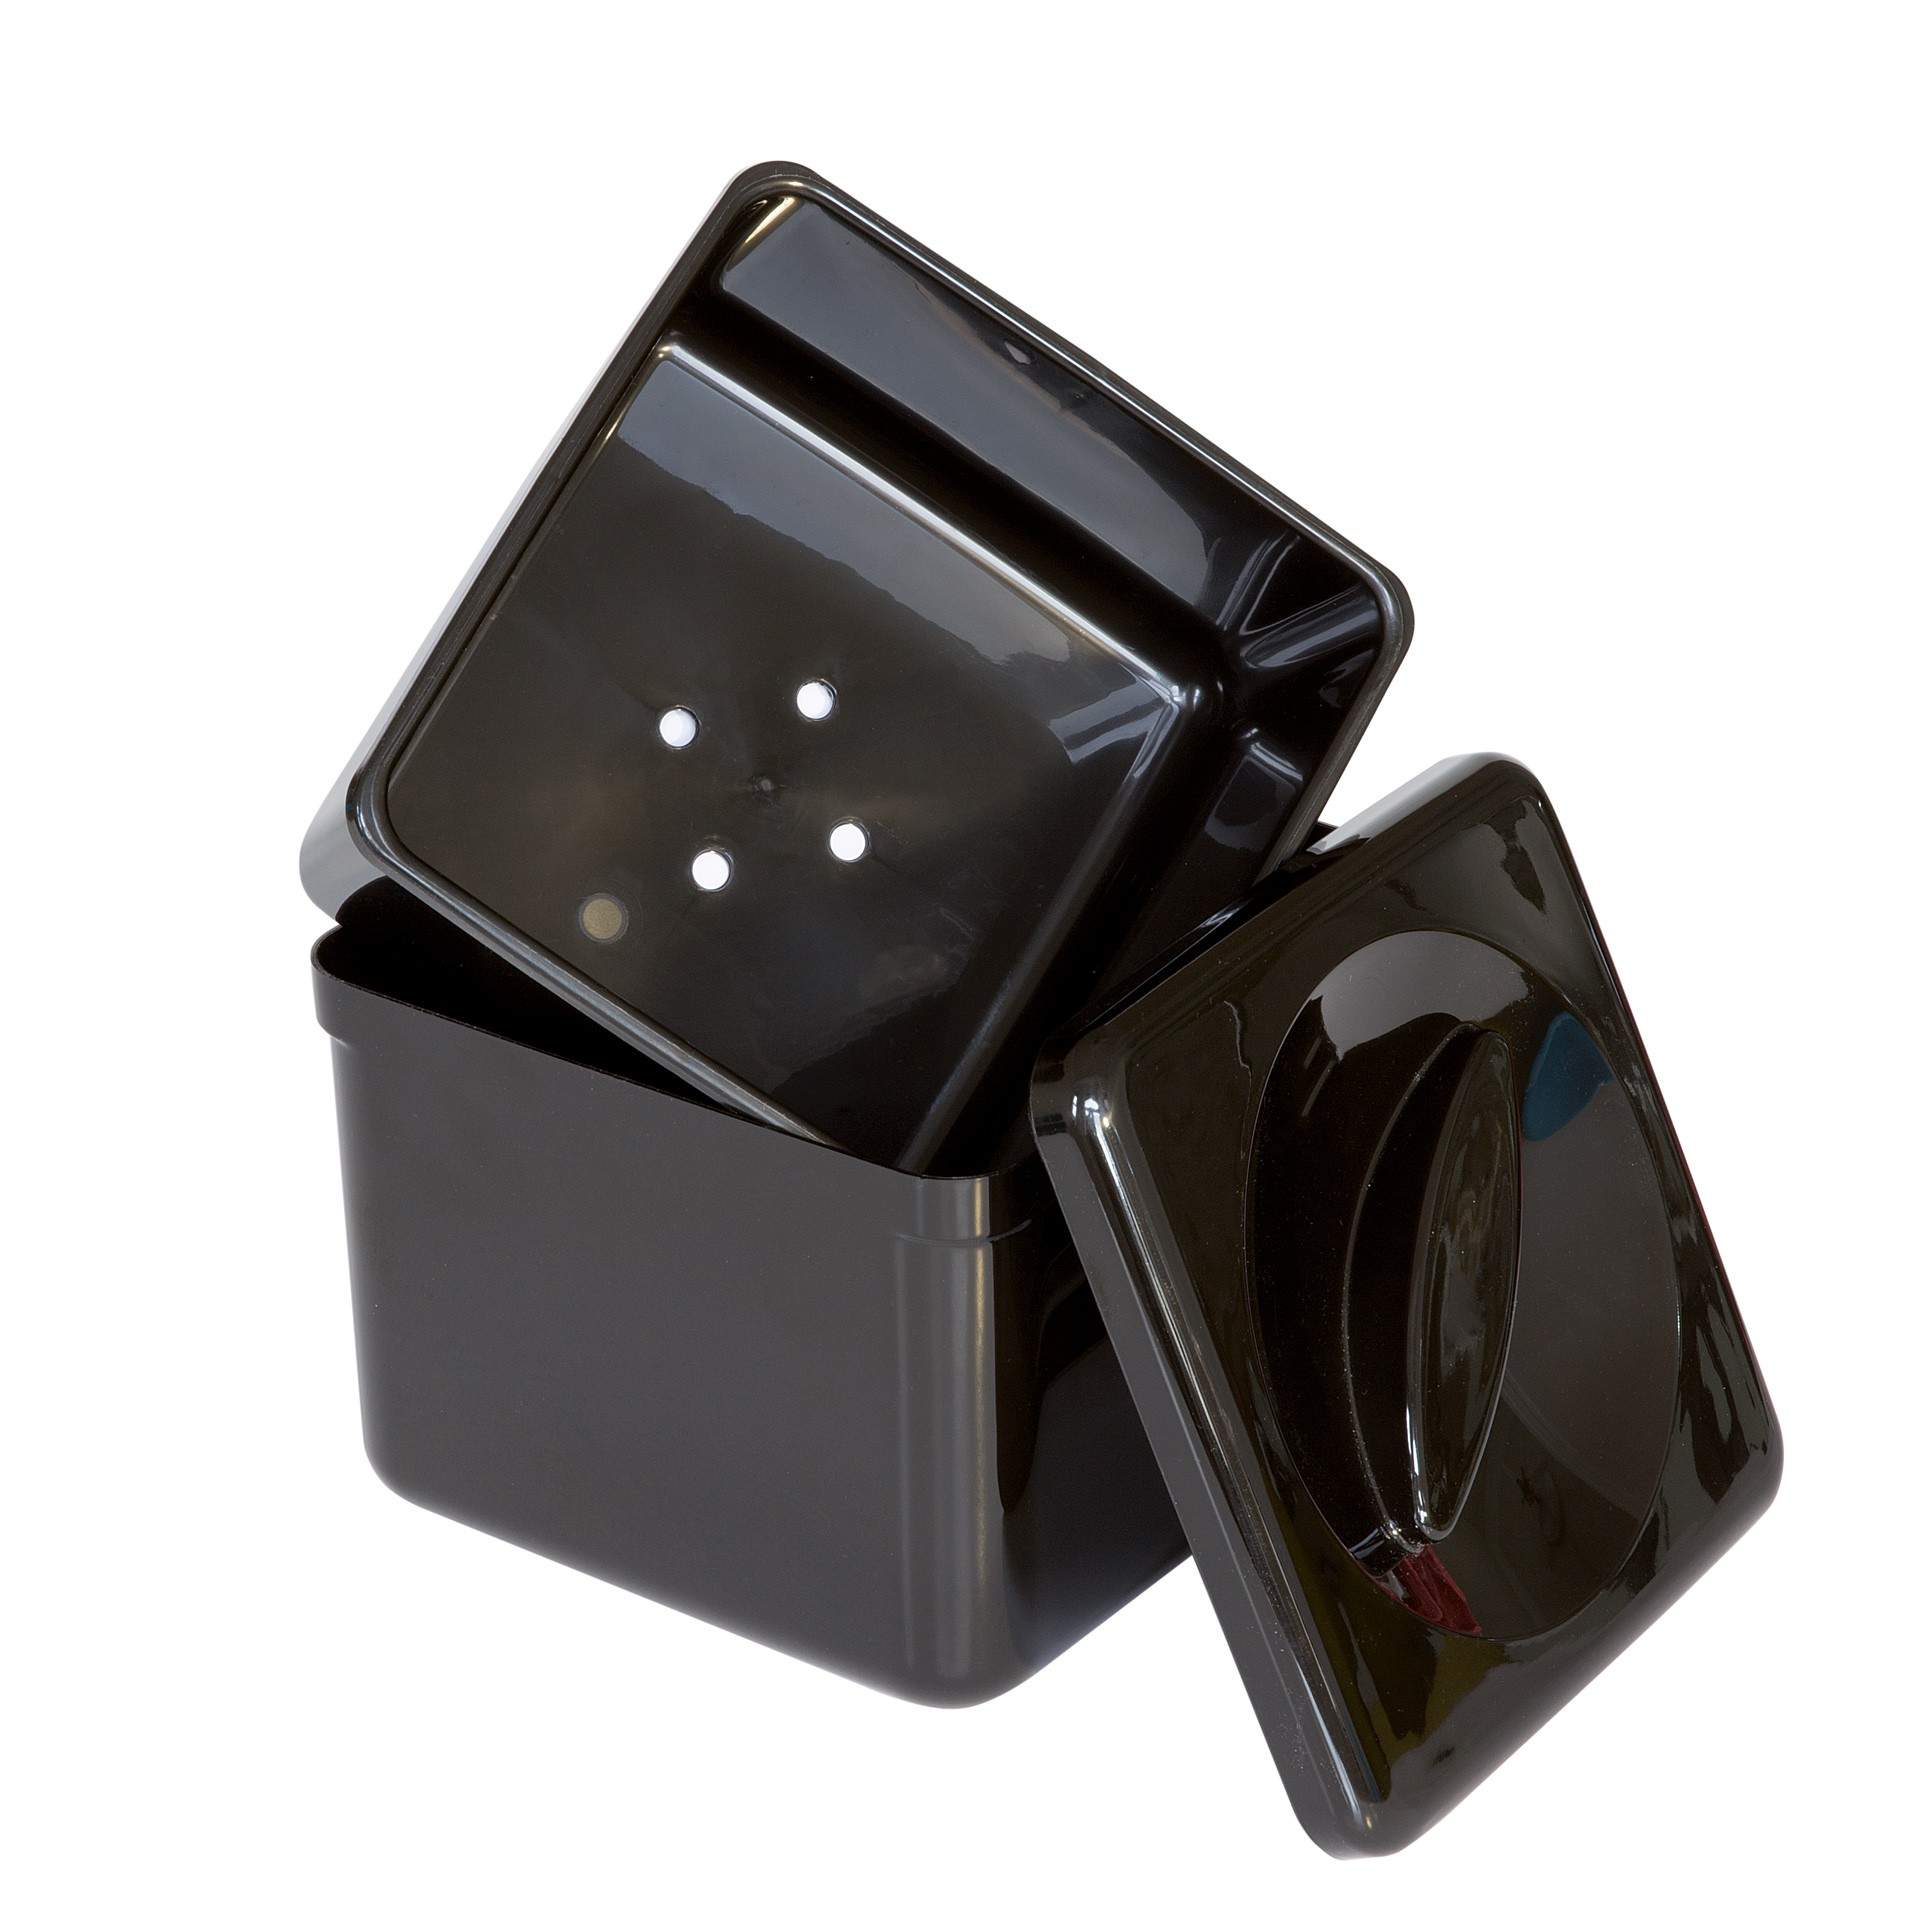 Eisbox - herausnehmbarer Tropfeinsatz - schwarz - quadratisch - Abm. 20 x 20 x 17 cm - Inhalt 3,4 l - Polystyrol - 93200-B